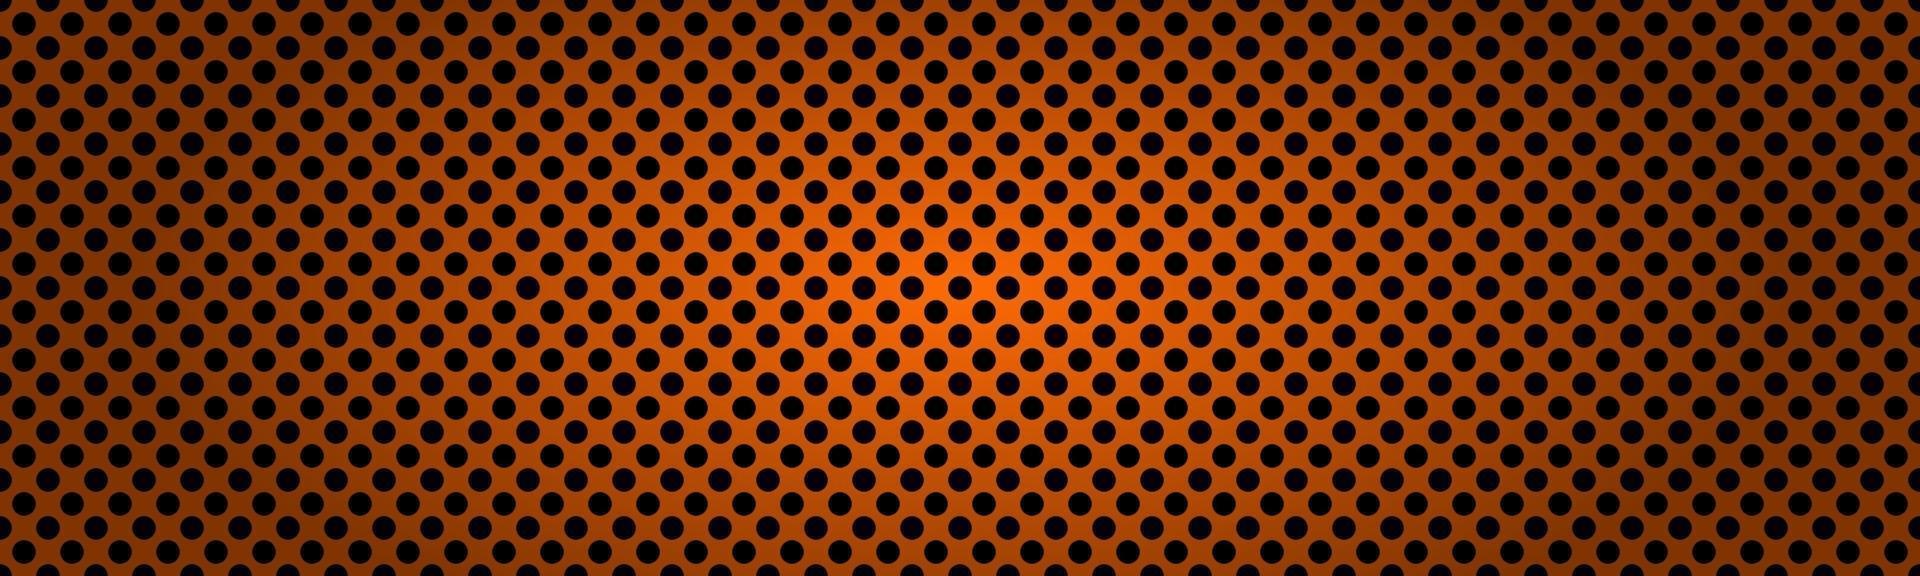 Perforated dark orange metallic header. Abstract banner vector illustration